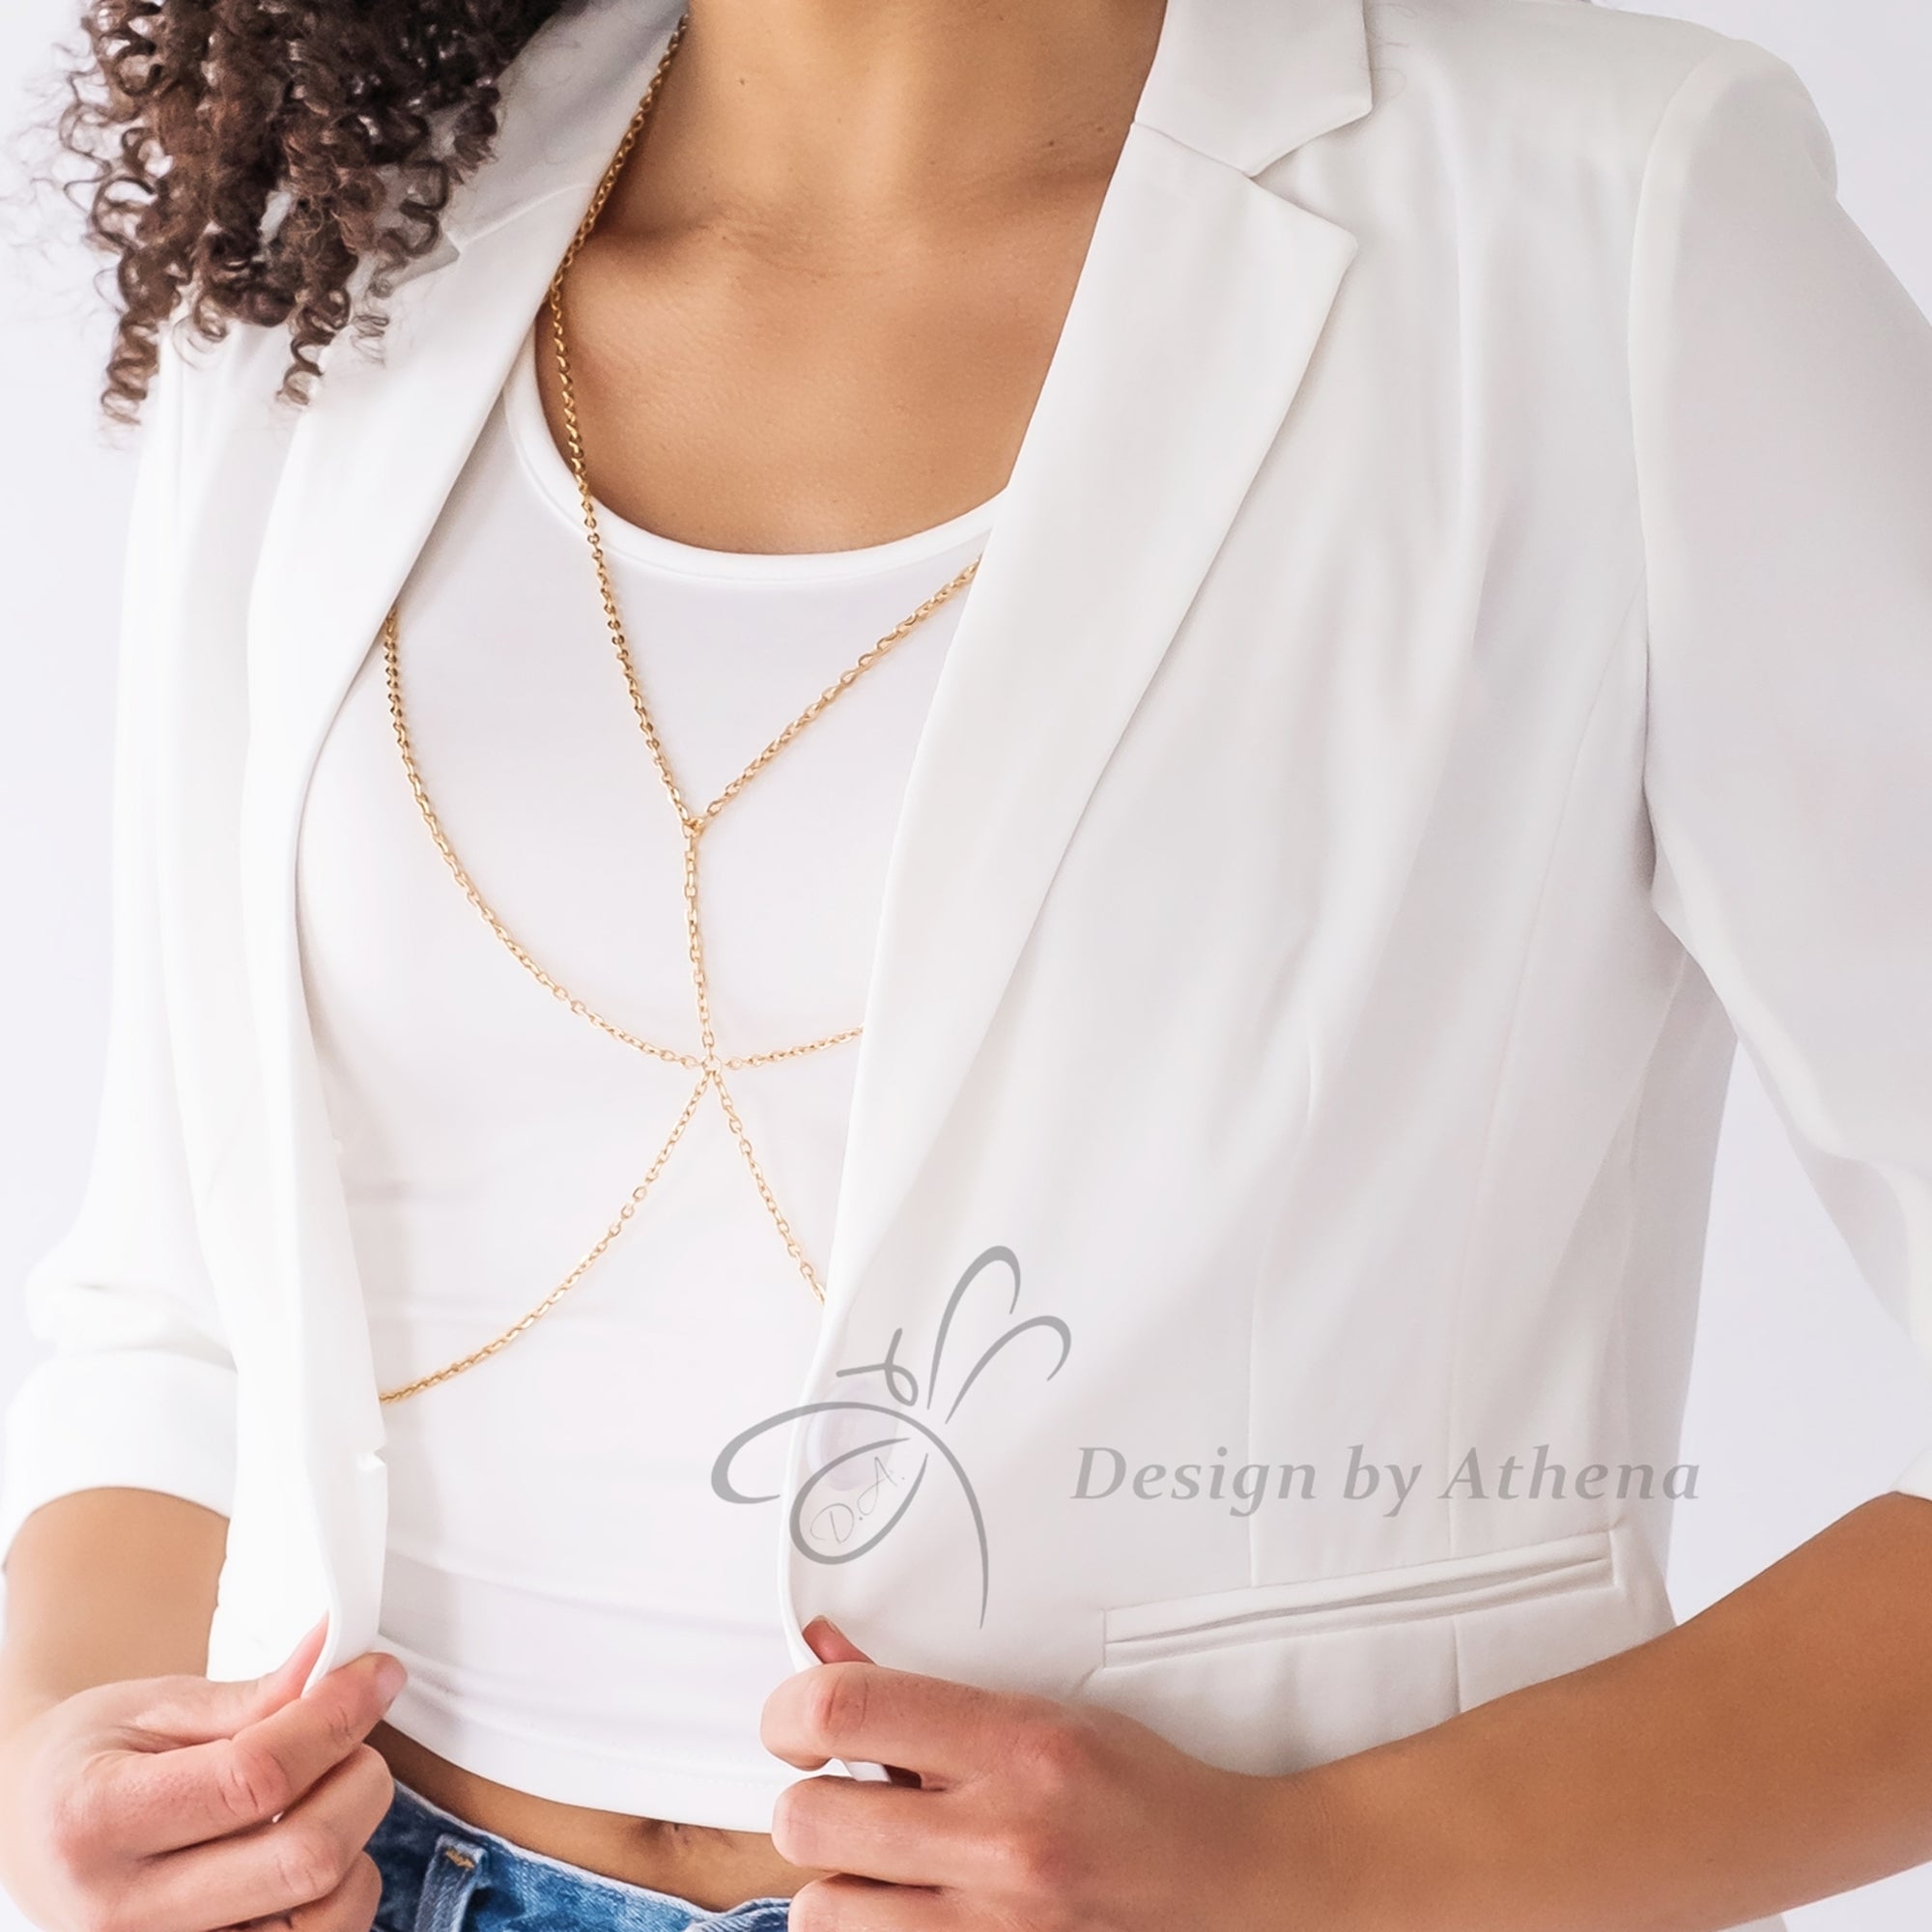 Pearl Bralette Chain Top Body Jewelry